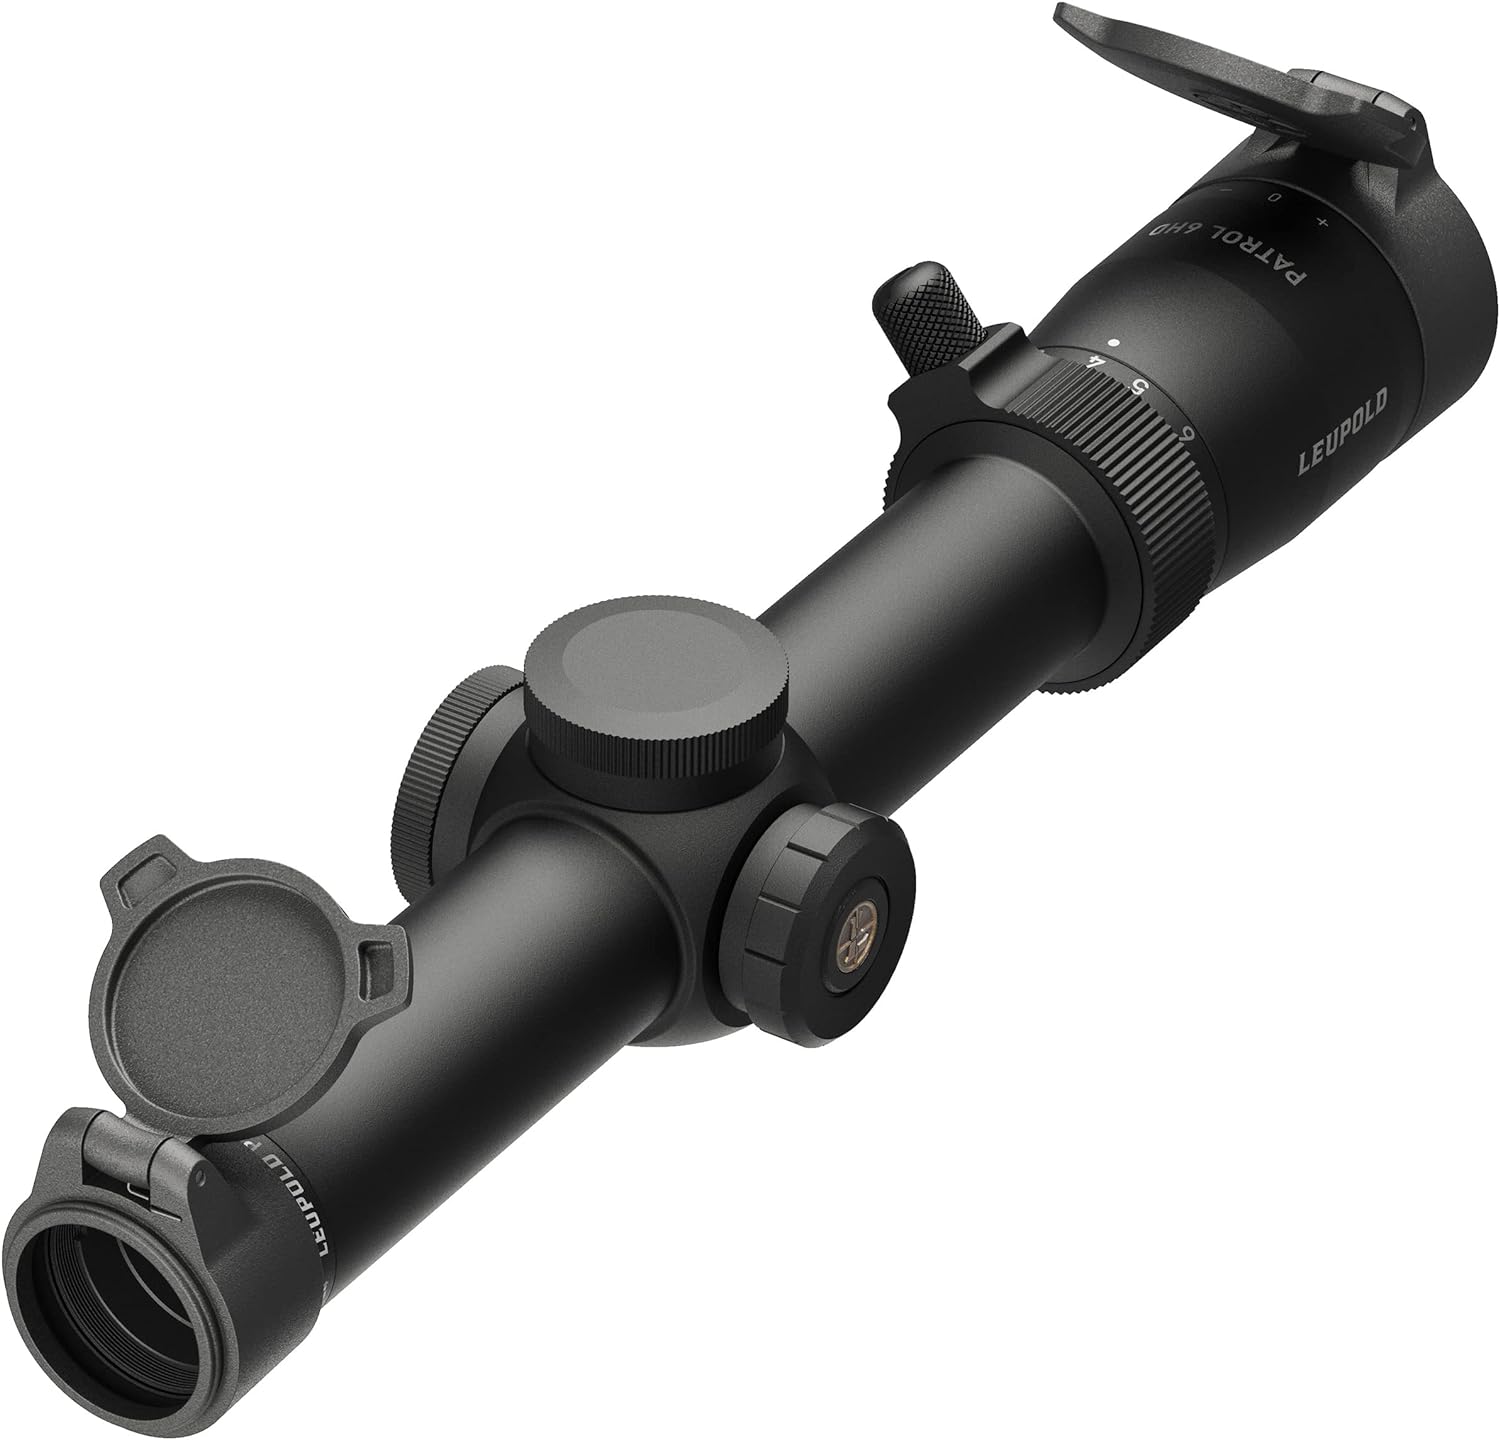 Leupold Mark Patrol 6HD Riflescope Review